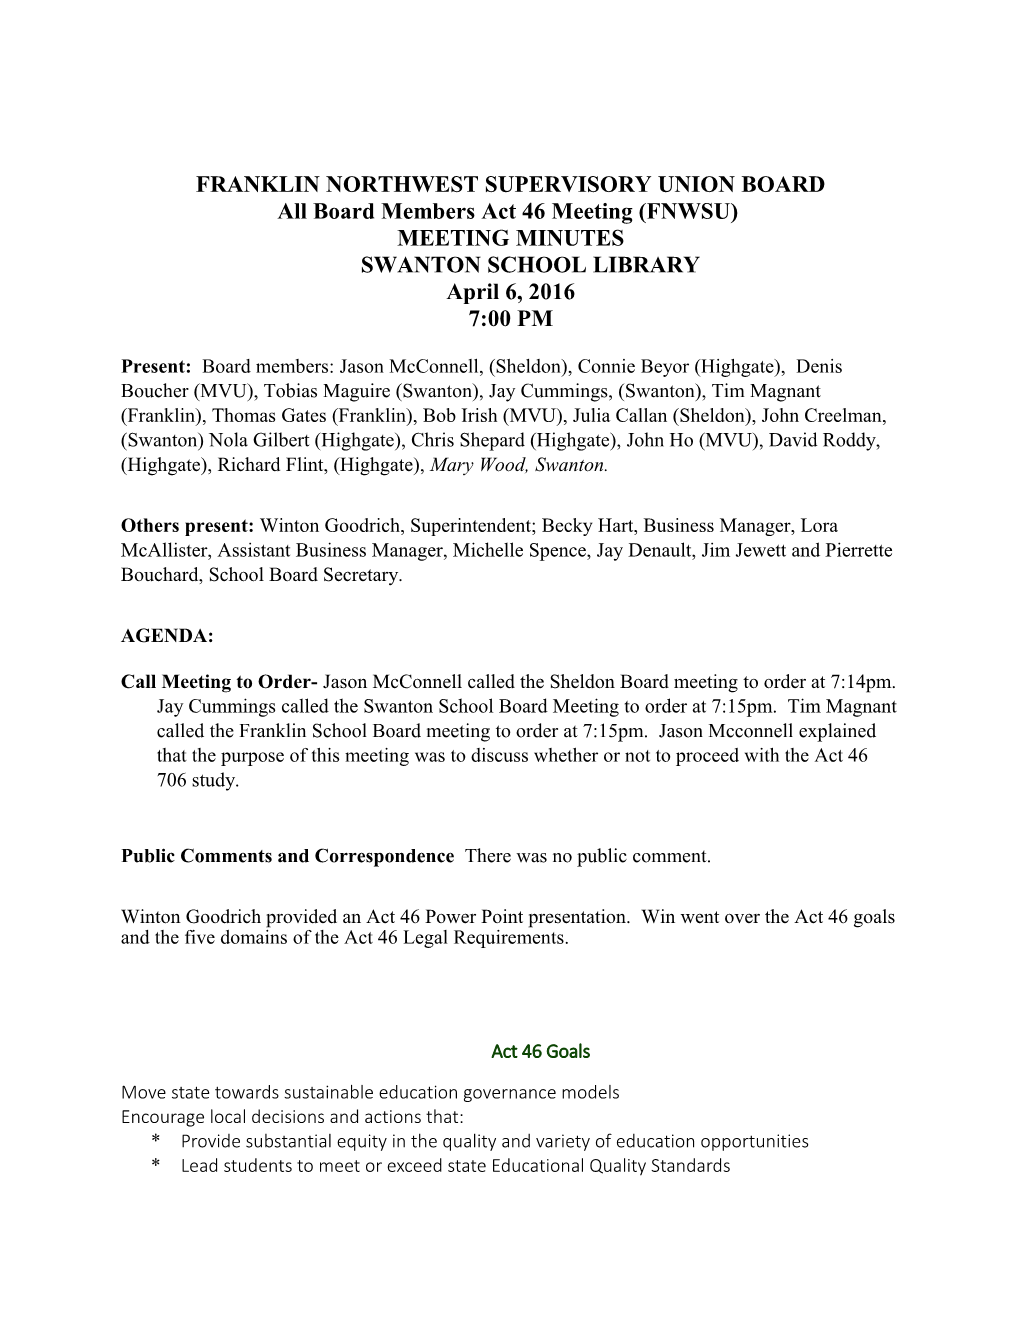 Franklin Northwest Supervisory Union Board